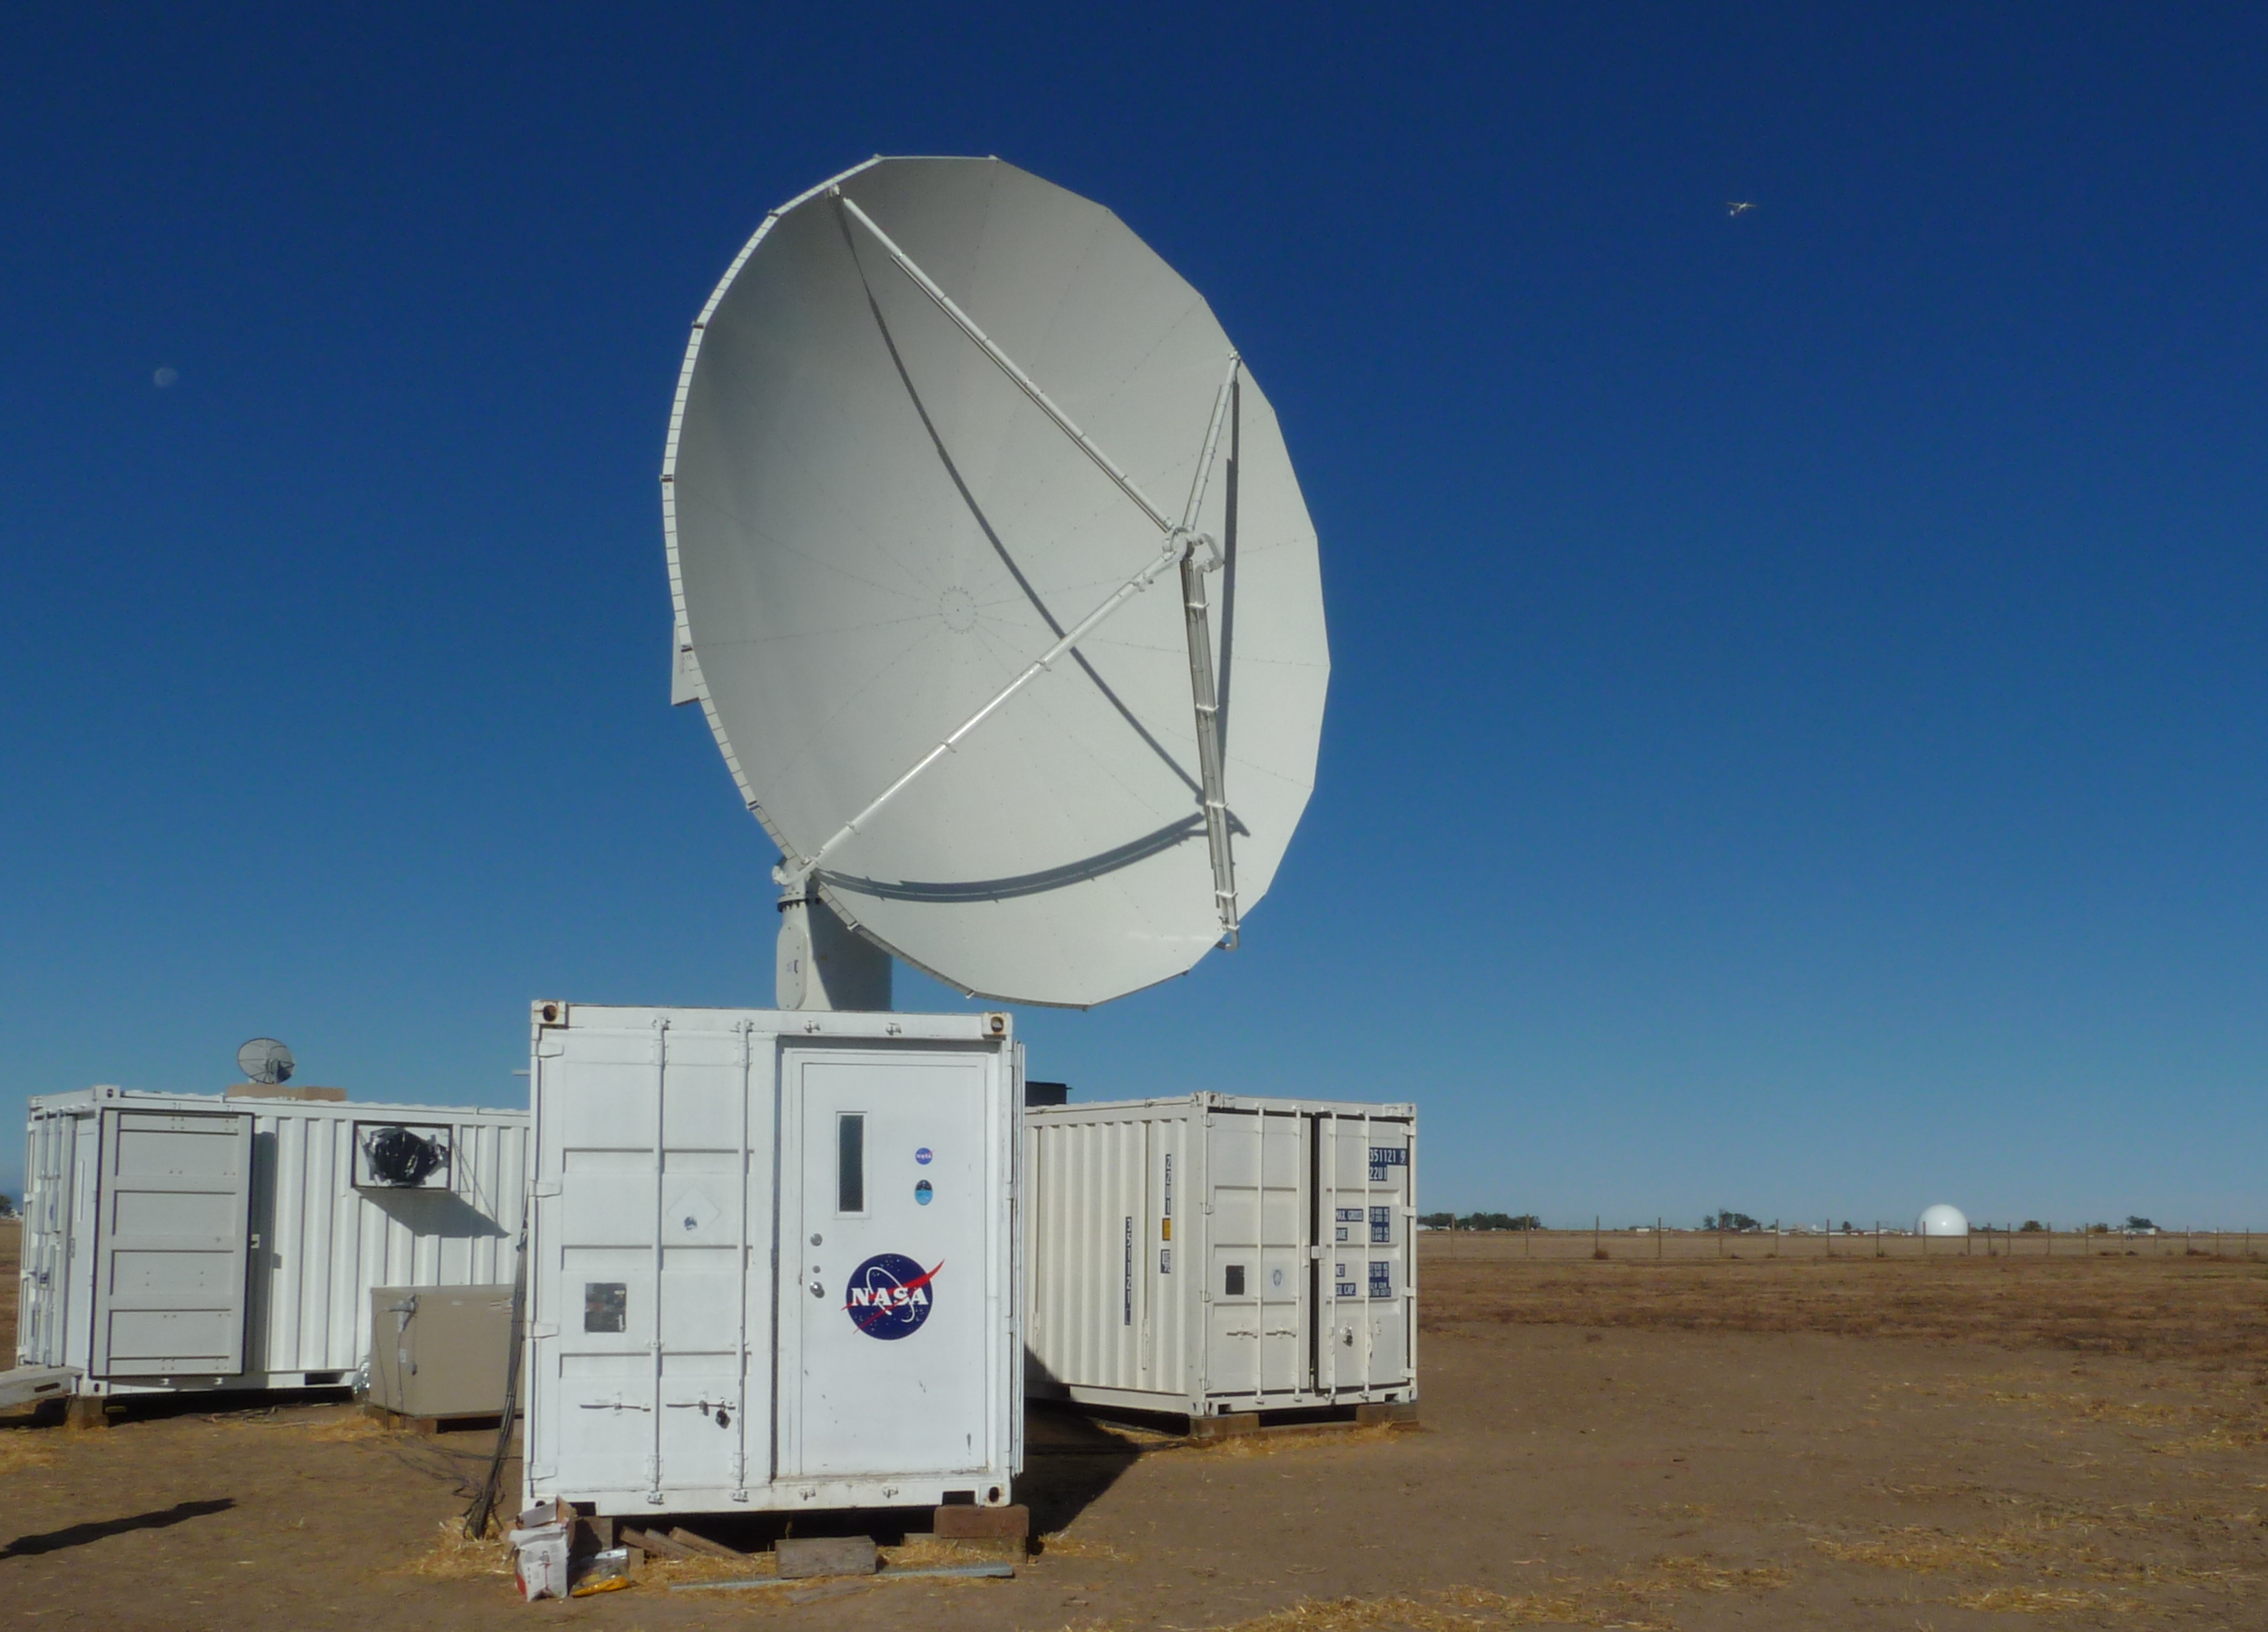 The NPOL instrument, a large circular radar dish under a blue sky